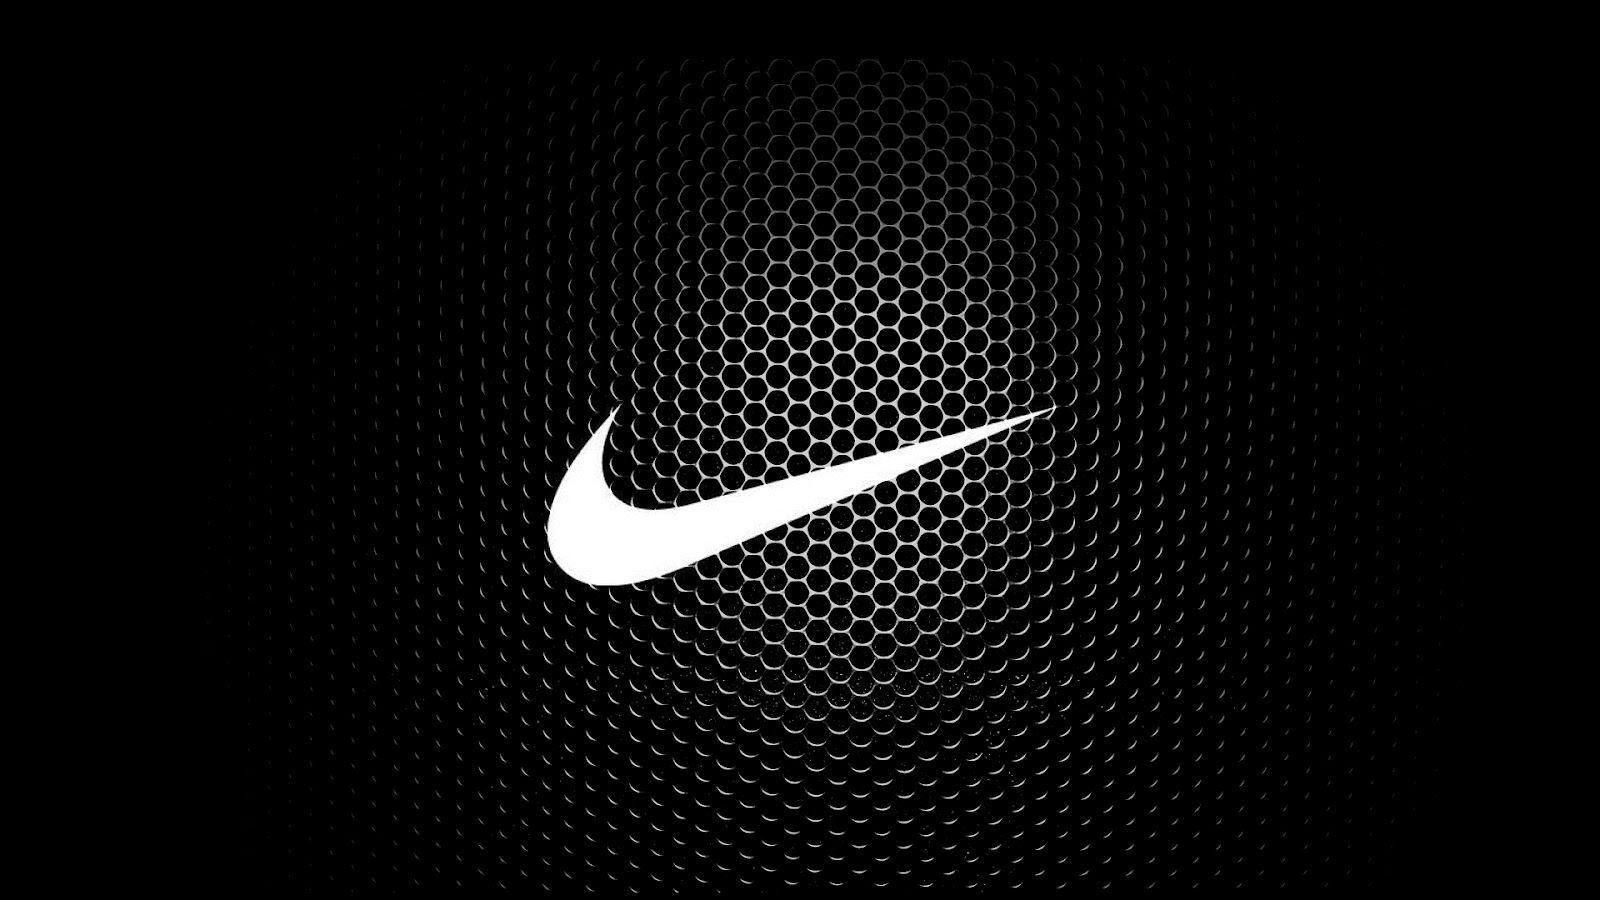 Nike Football Logo Wallpapers - Top Free Nike Football Logo Backgrounds -